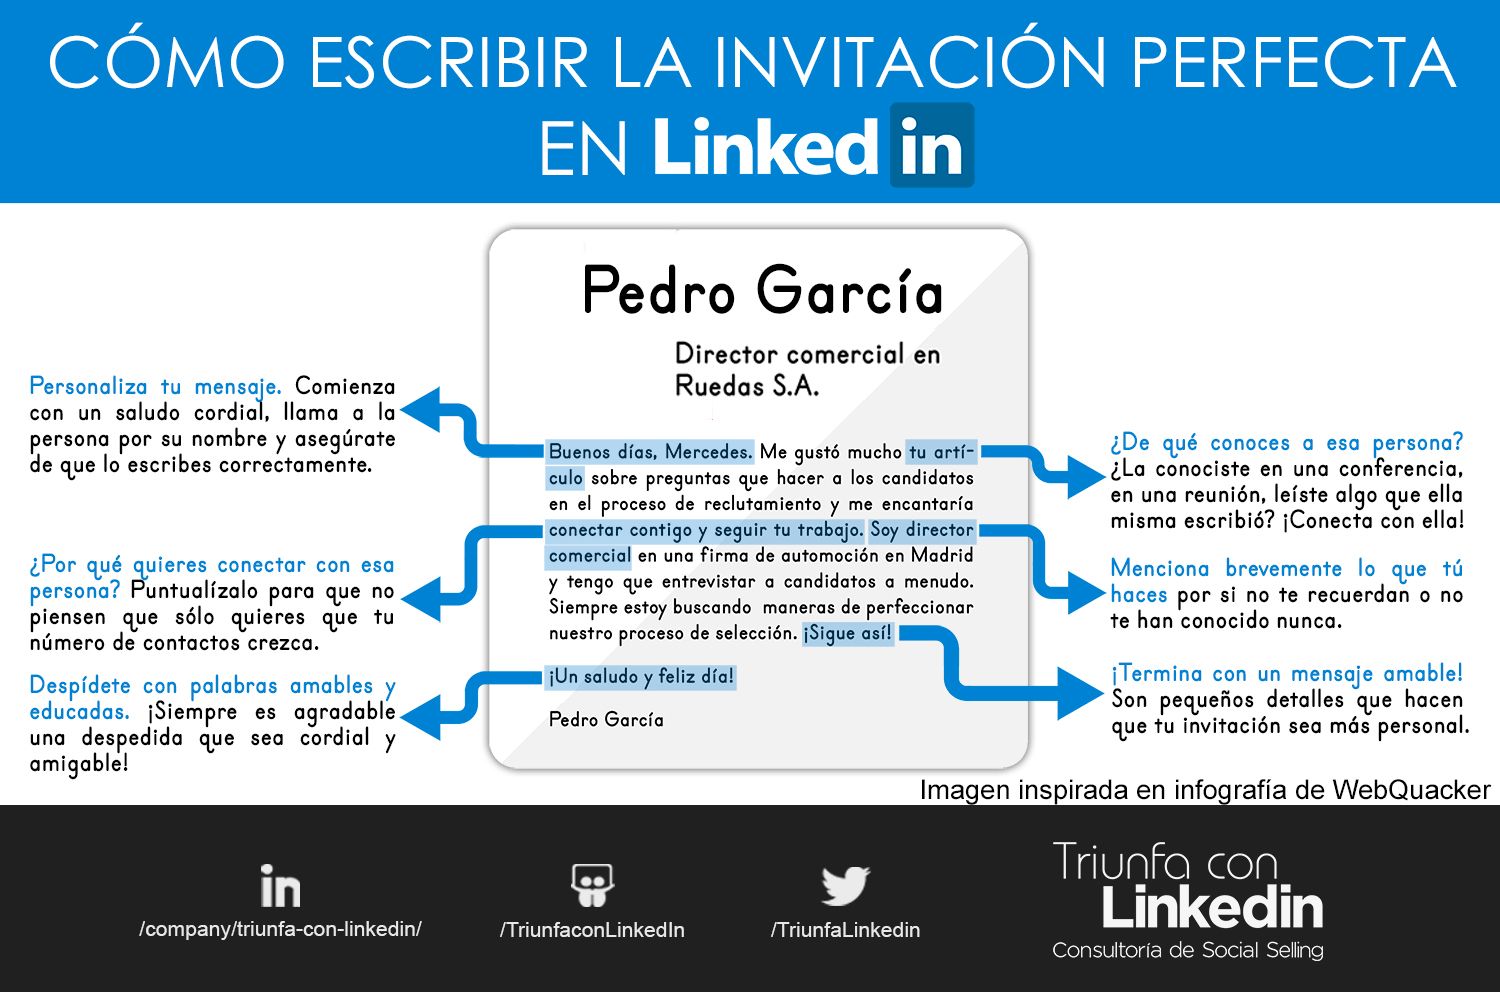 Invitaciones en LinkedIn - Ejemplo Social Networking